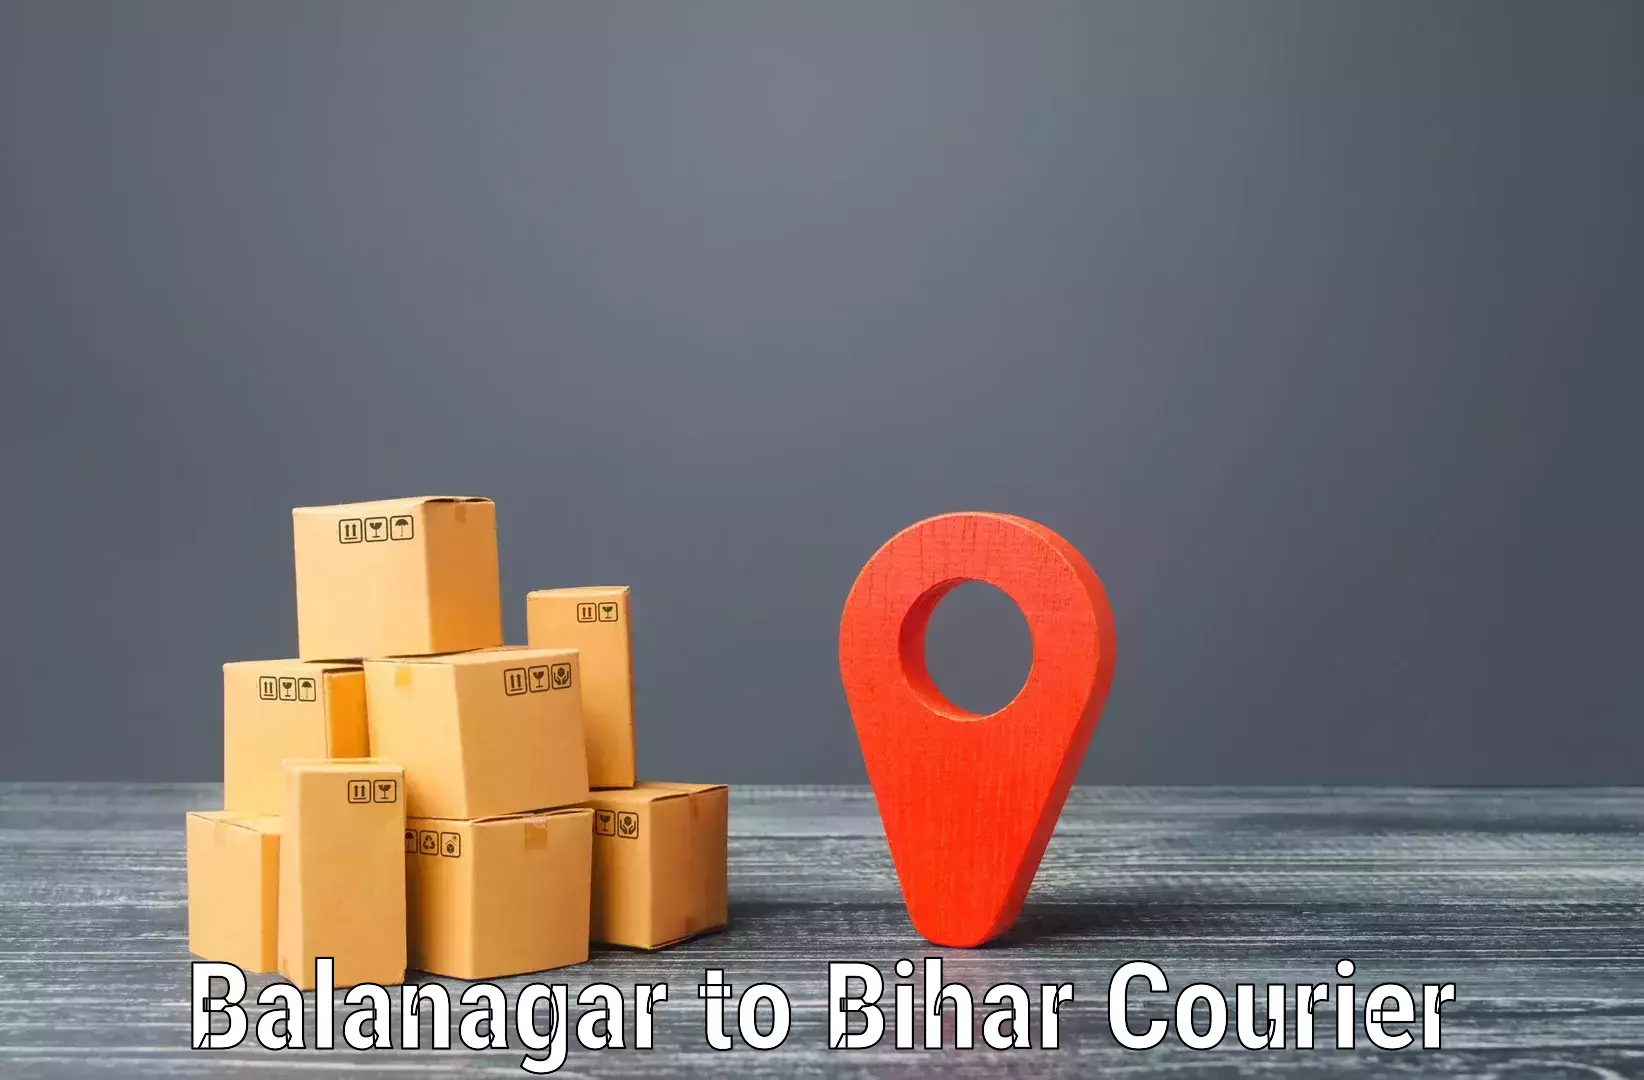 Bulk courier orders in Balanagar to Bettiah